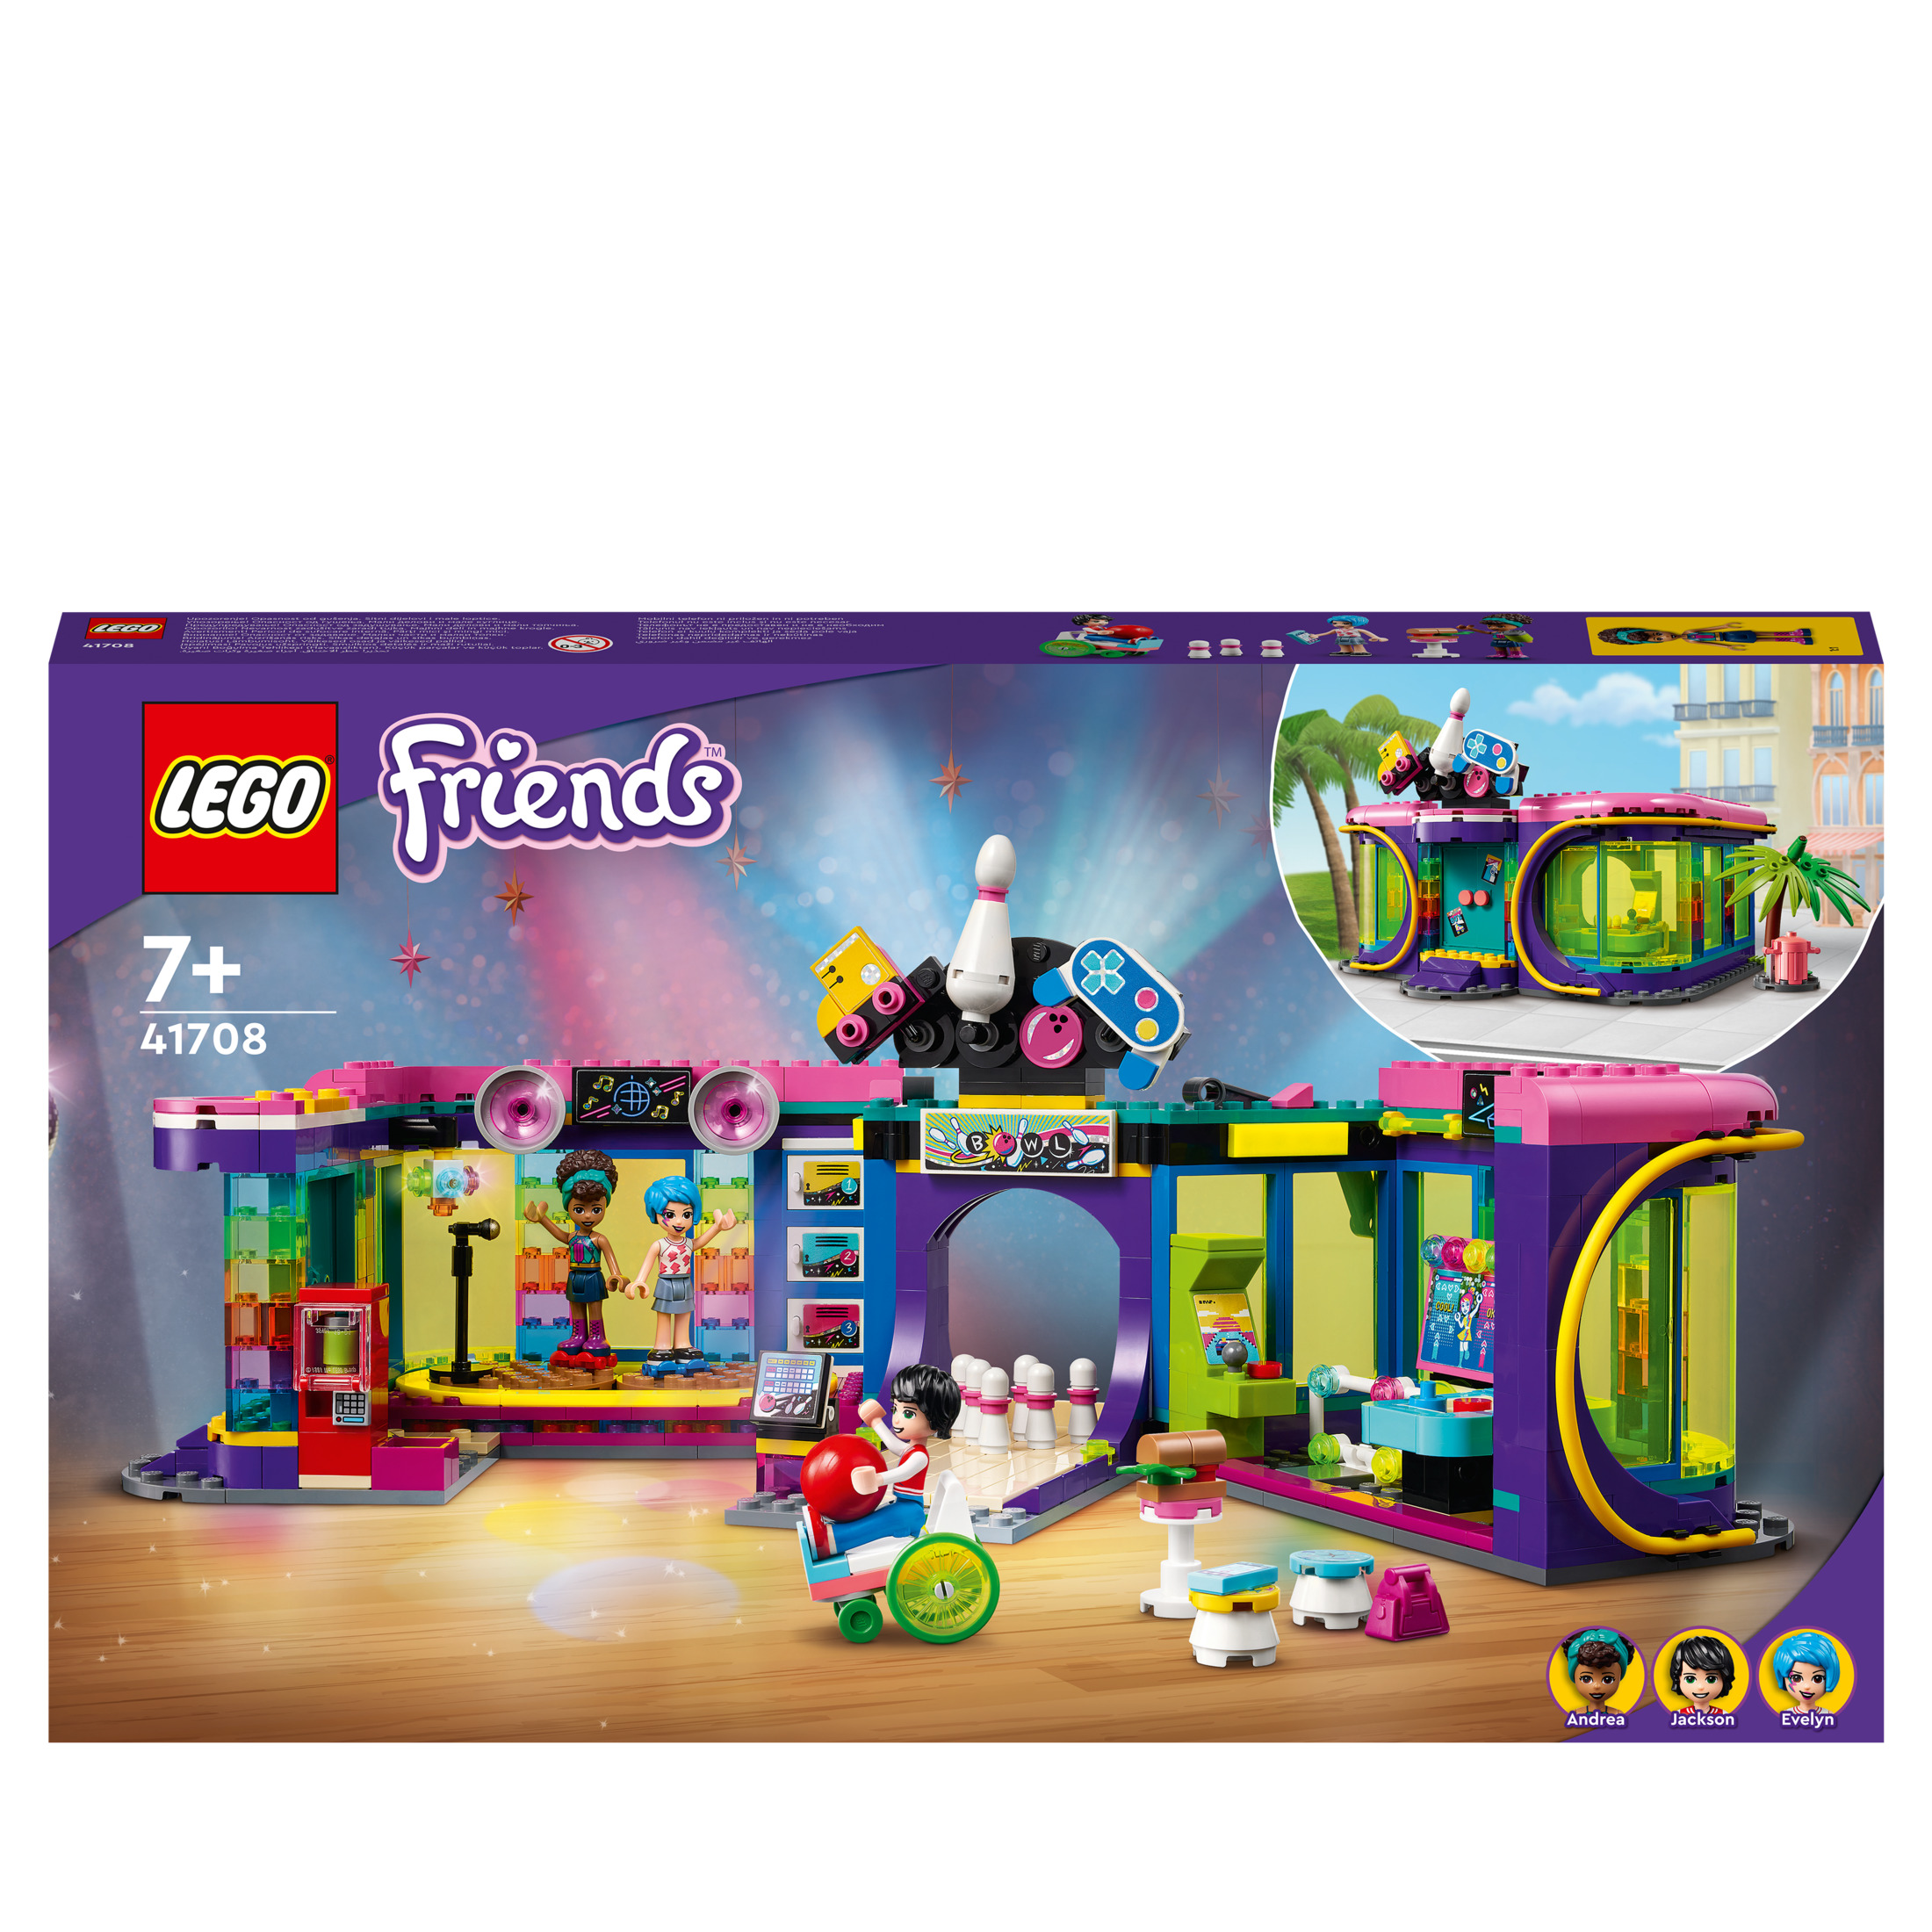 Friends ROLLSCHUHDISCO 41708 LEGO LEGO